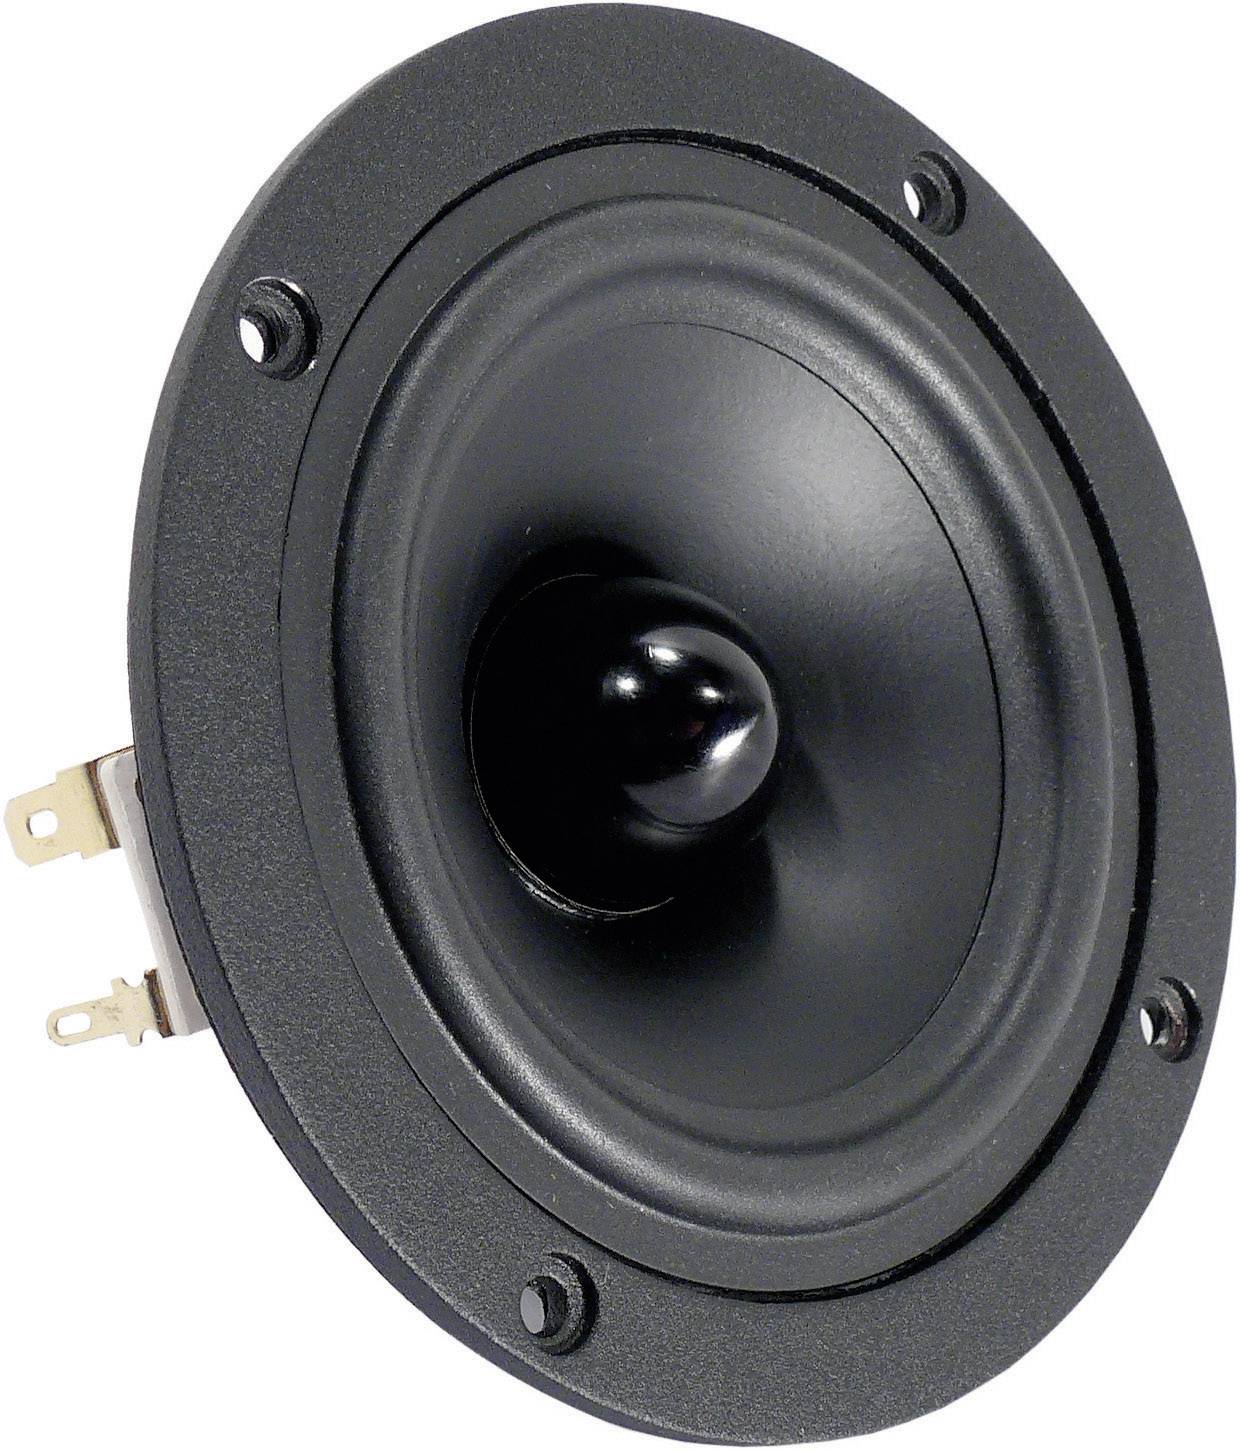 Zeeziekte Pessimist financieel Visaton B 80 3.3 inch 8 cm Wideband speaker 30 W 8 Ω | Conrad.com